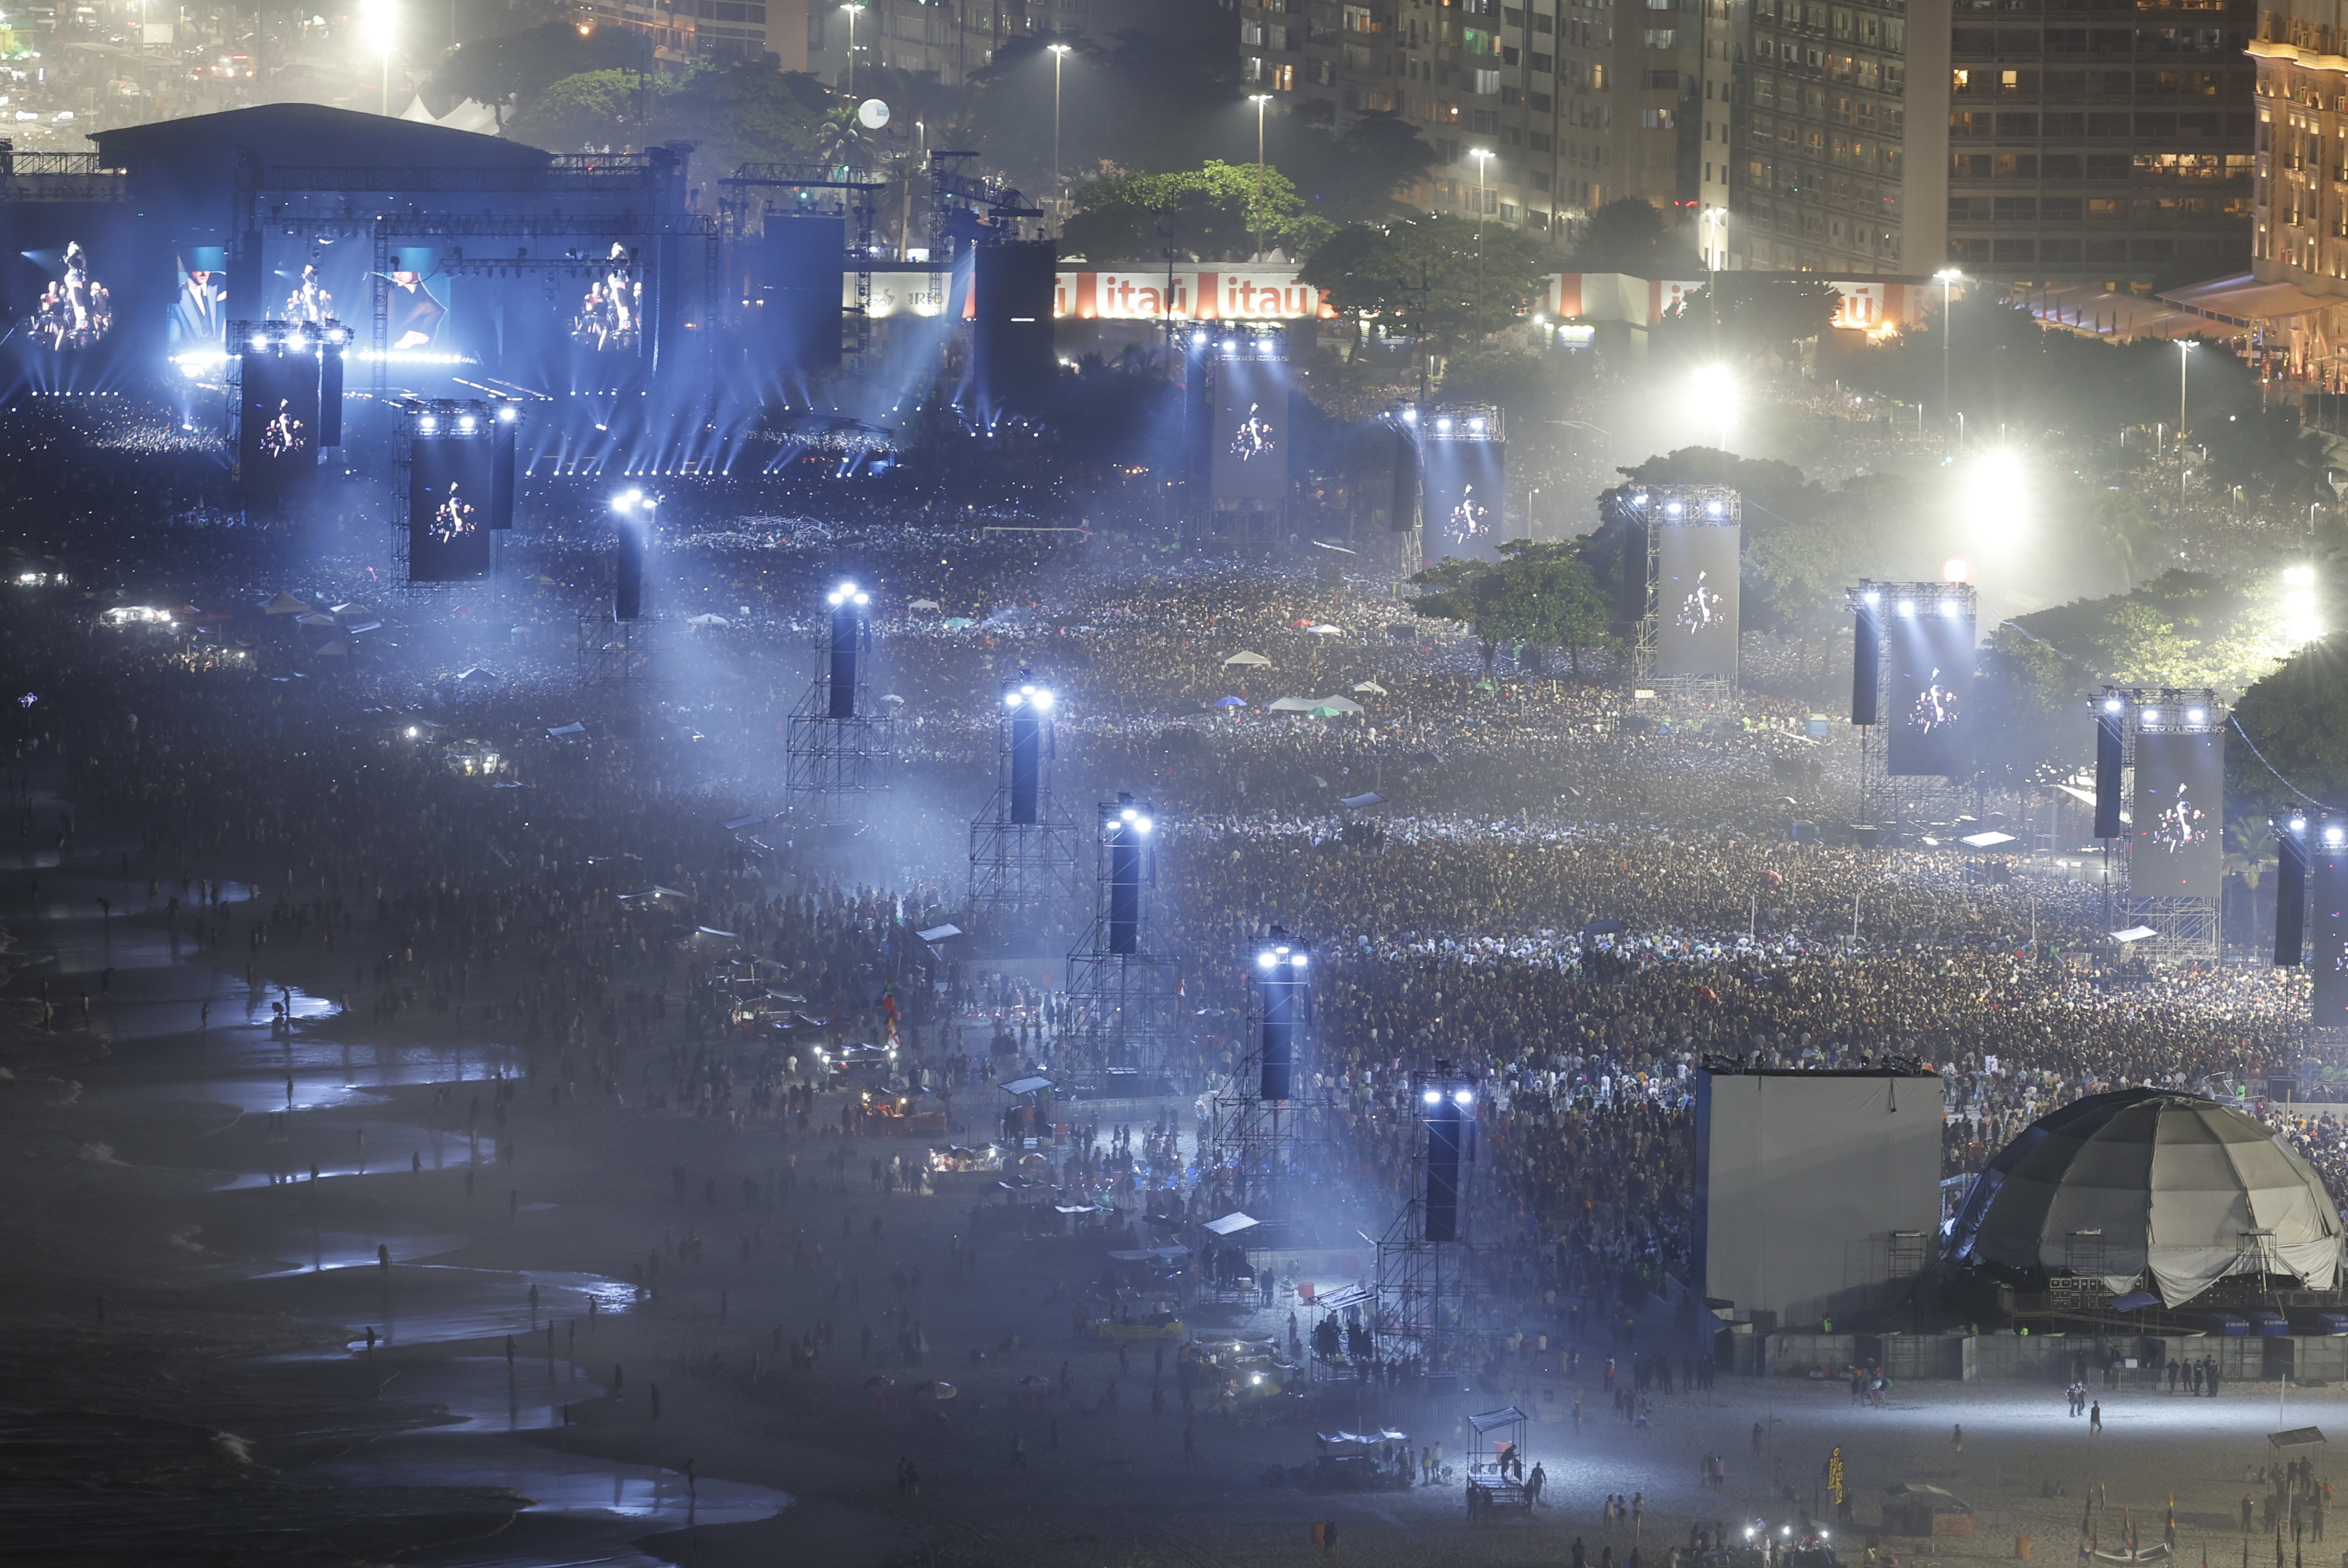 Thousands gathered on Copacabana Beach in Rio de Janeiro, Brazil